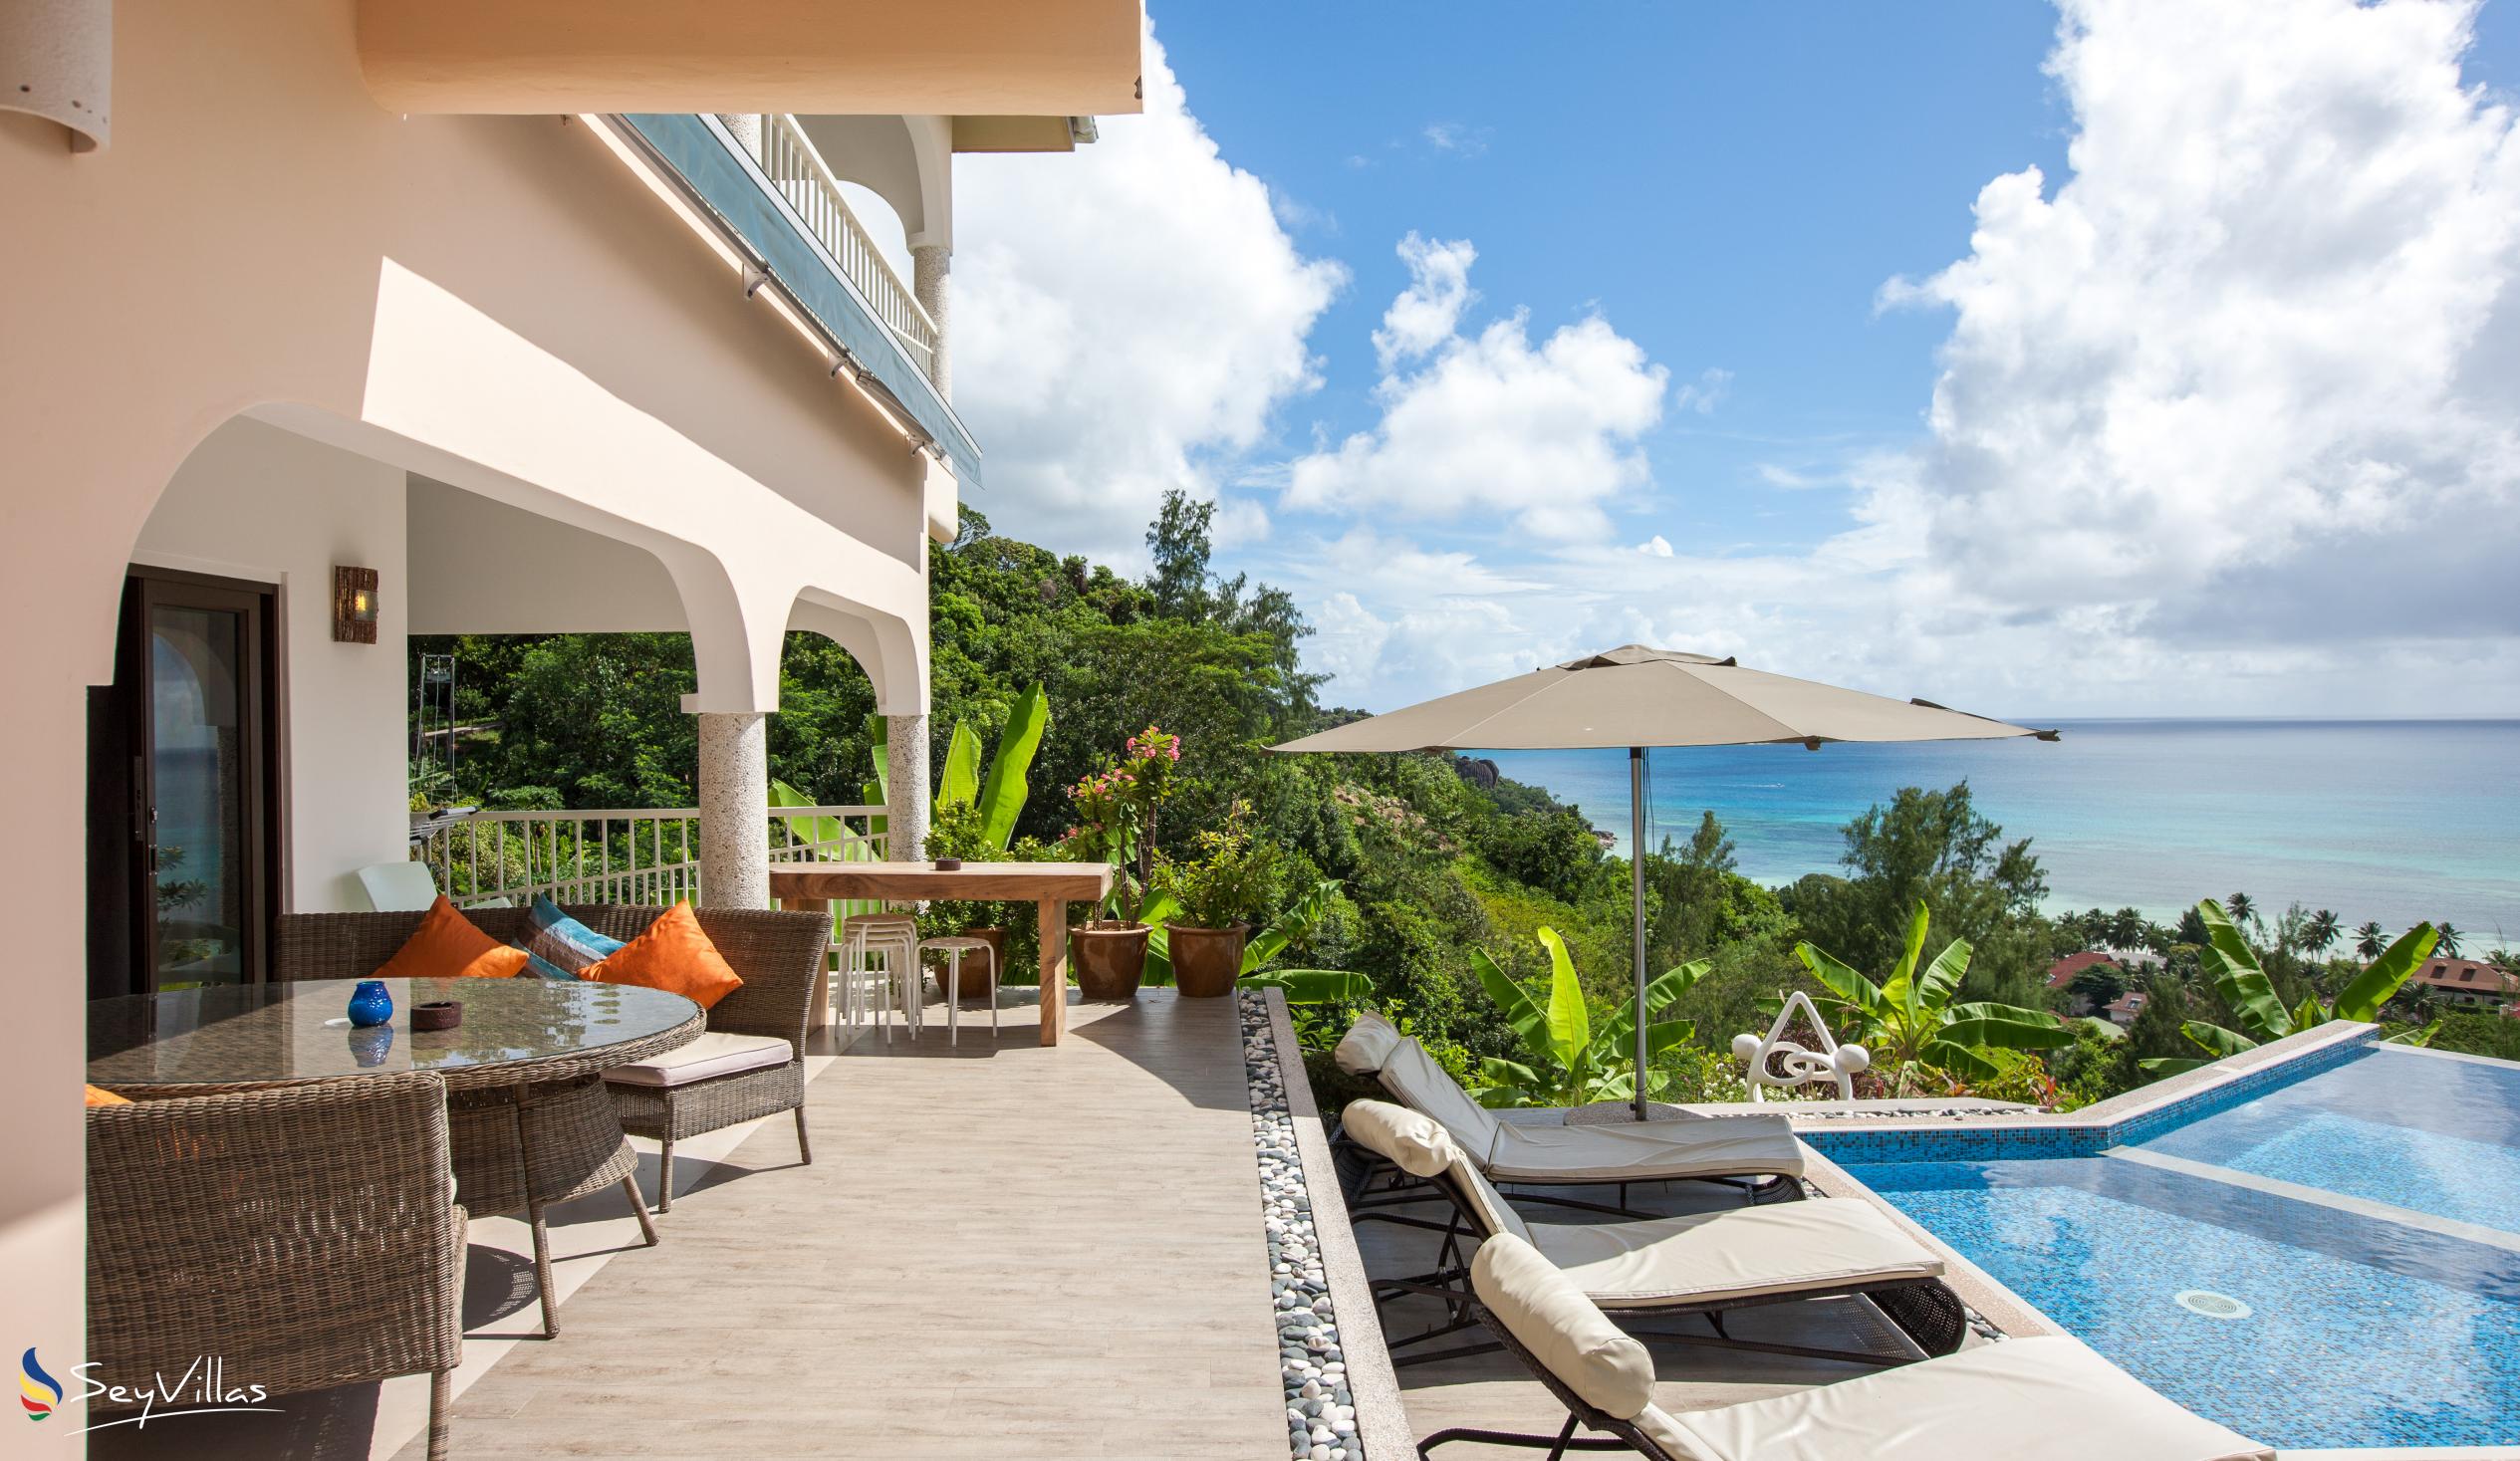 Foto 62: Le Duc de Praslin Hillside Villas - Villa 270° - Praslin (Seychellen)